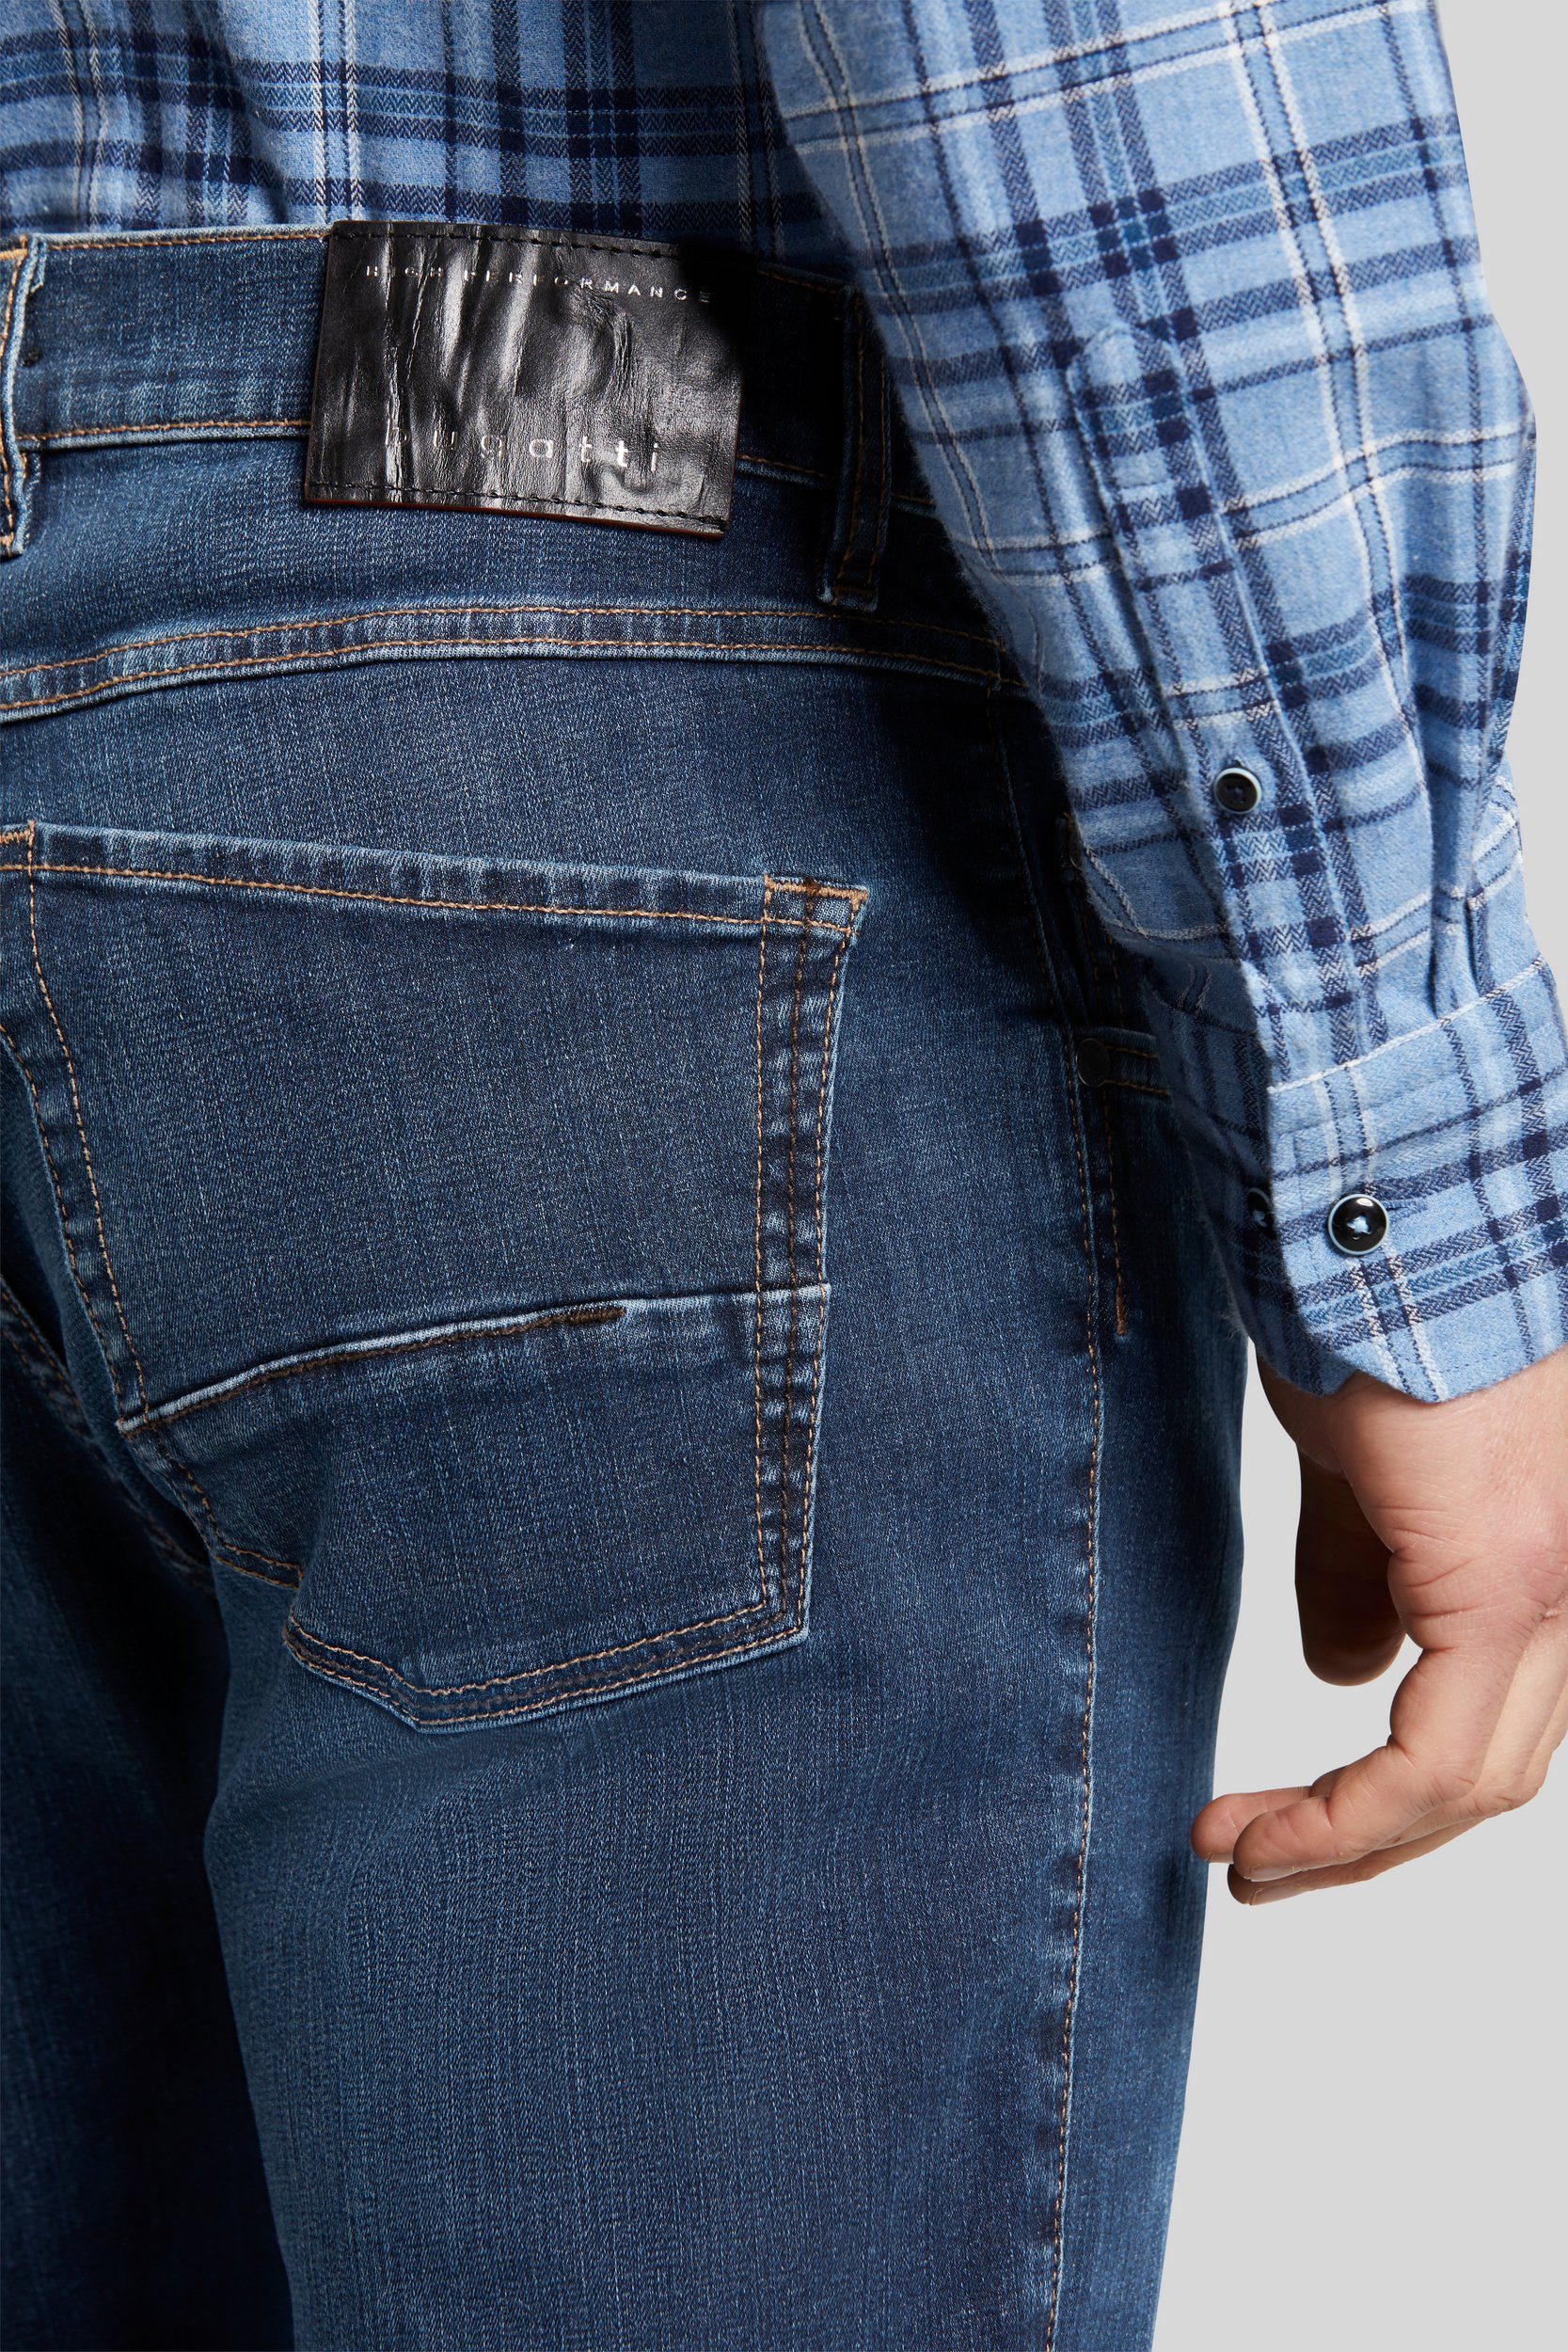 mit 5-Pocket-Jeans Tragekomfort hohem bugatti blau Denim Flexcity